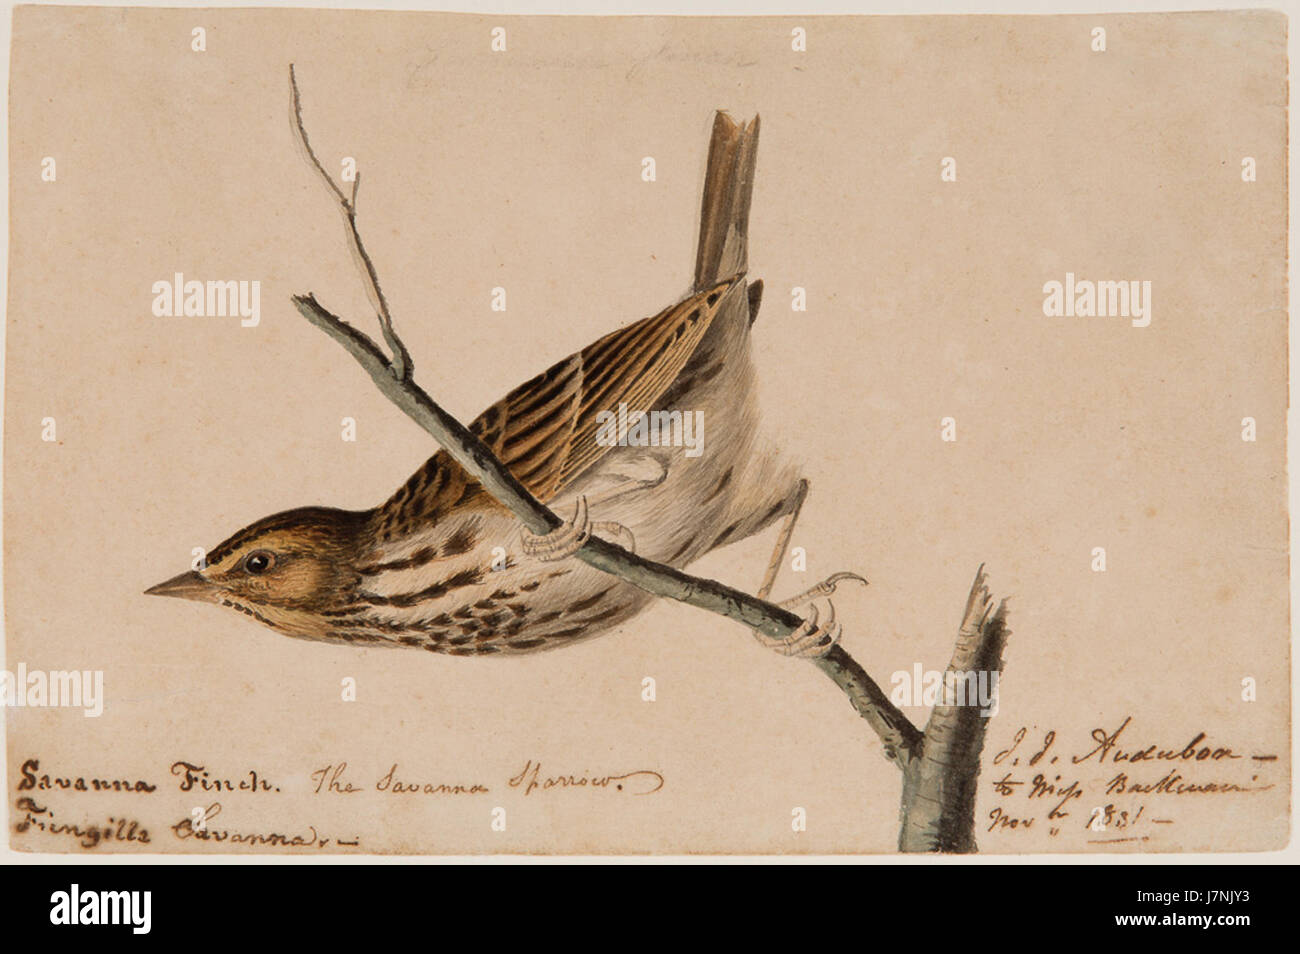 Savanna Finch by John James Audubon, 1831, watercolor Stock Photo